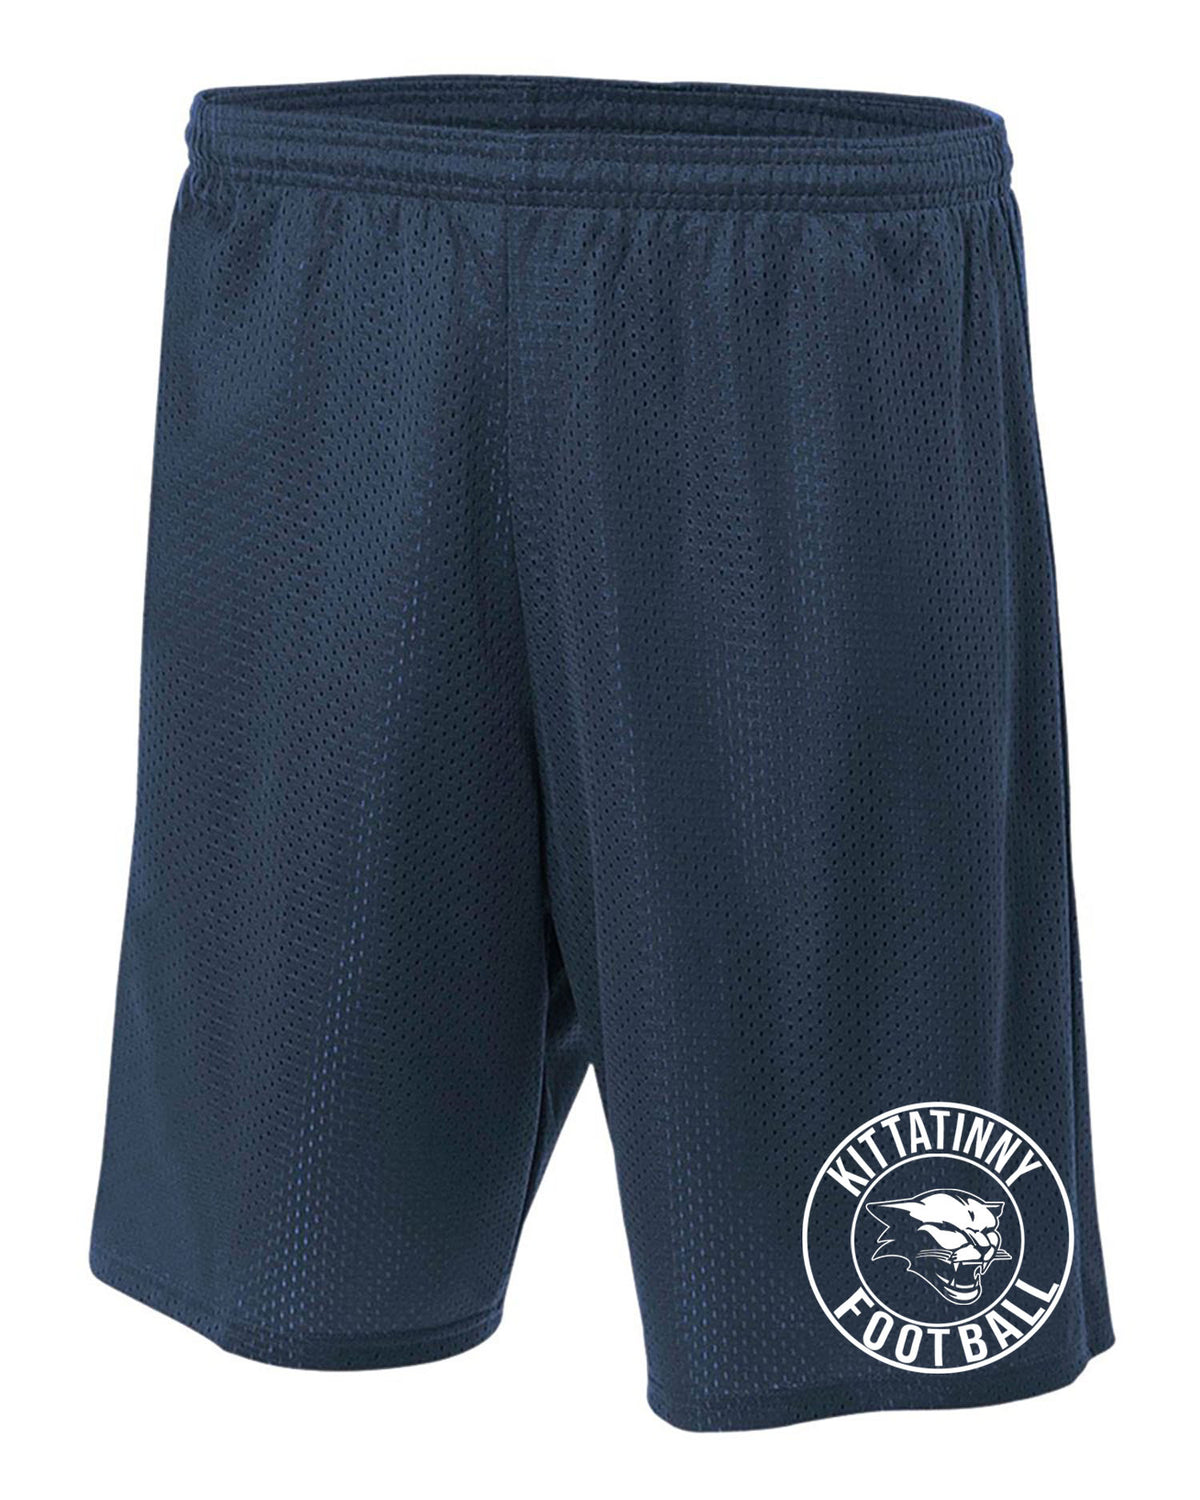 Kittatinny Football Design 5 Mesh Shorts